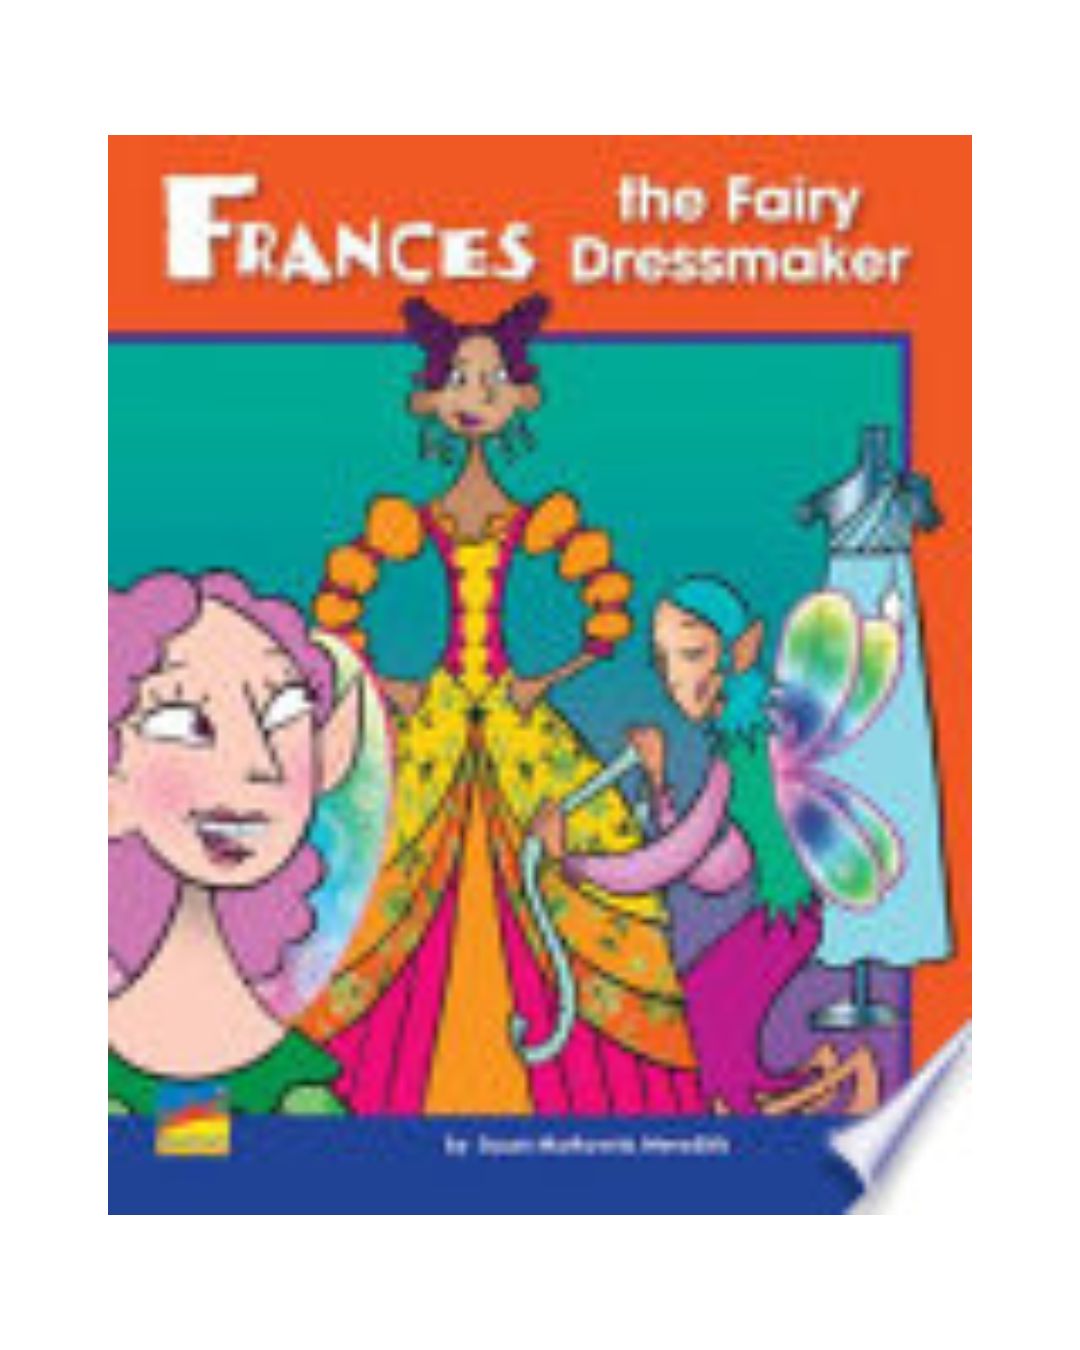 buy frances the fairy dressmaker staple bound - OnlineBooksOutlet